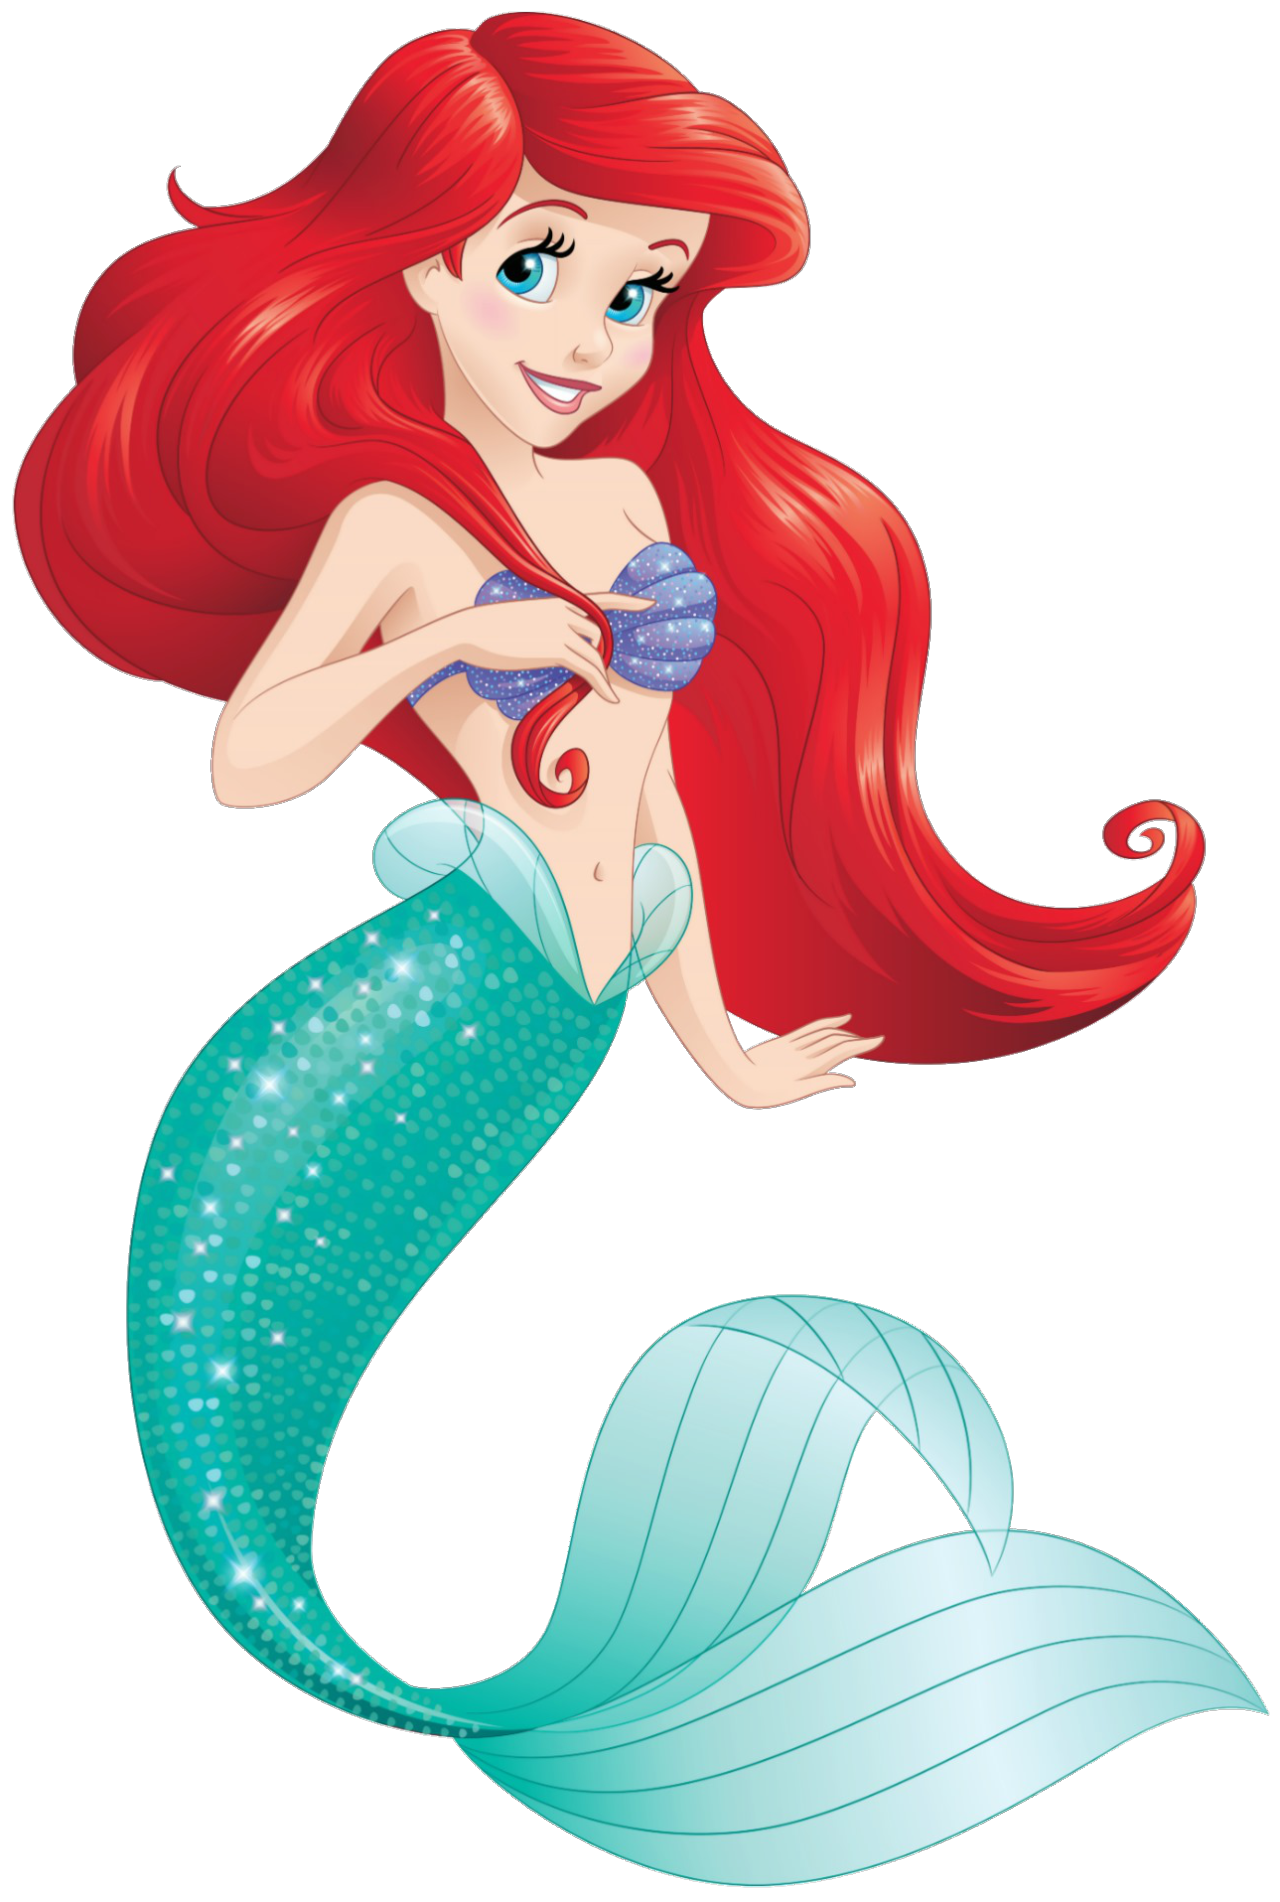 Ariel the little mermaid.png